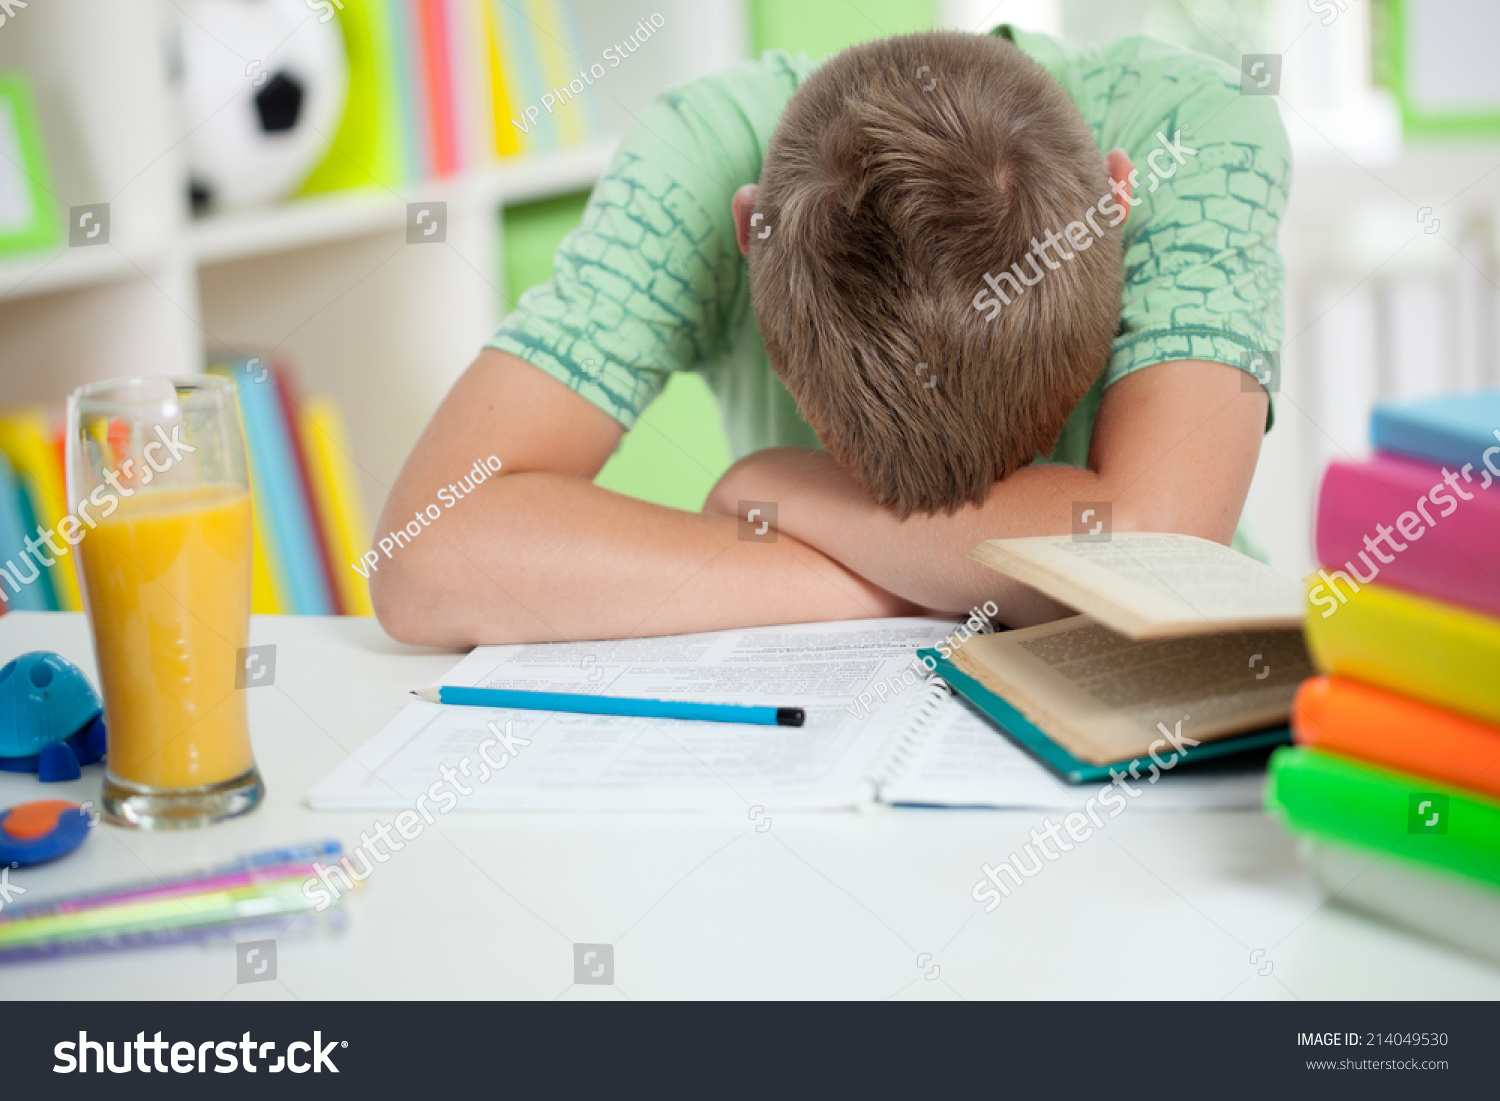 Tired Kid Sleeping On Desk Home Stock Photo Edit Now 214049530